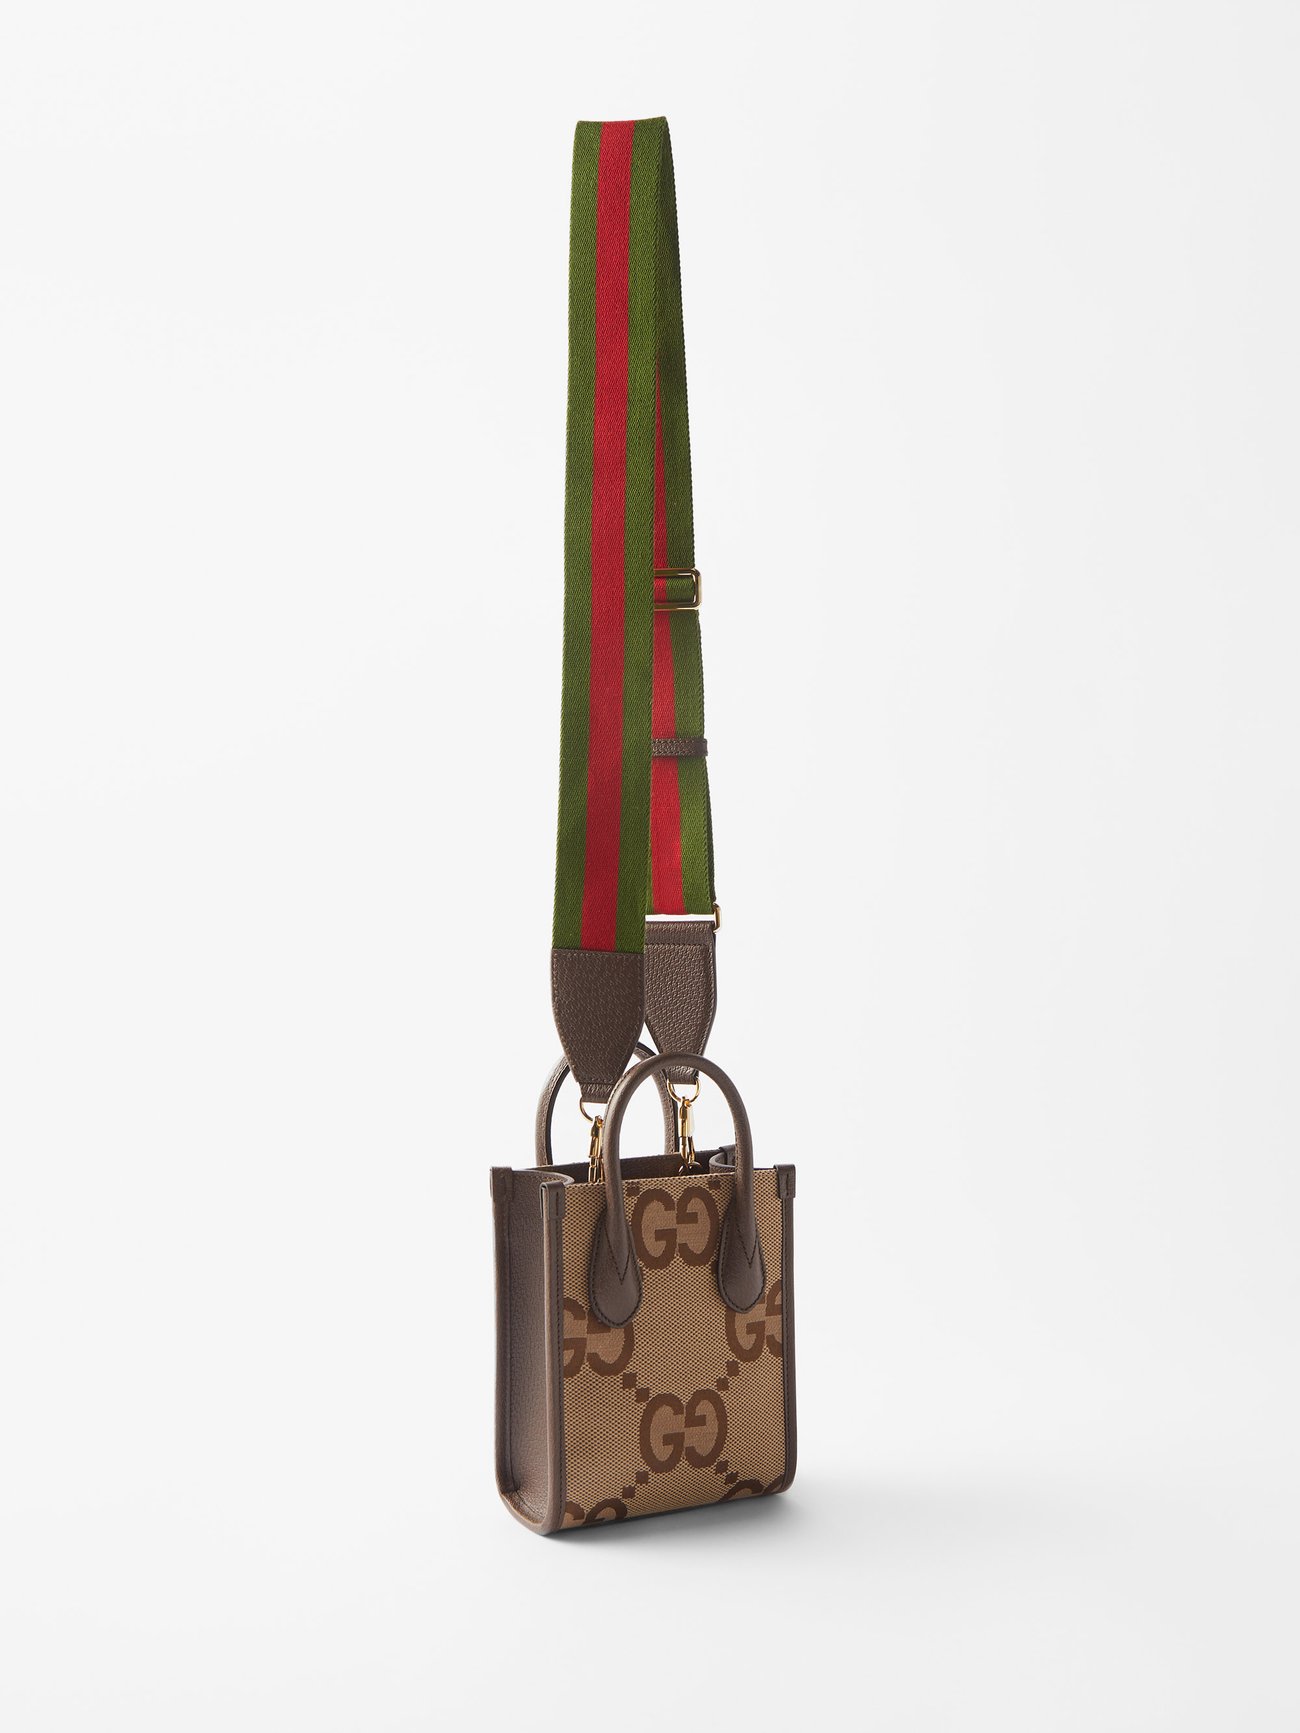 Jumbo GG mini tote bag, Gucci